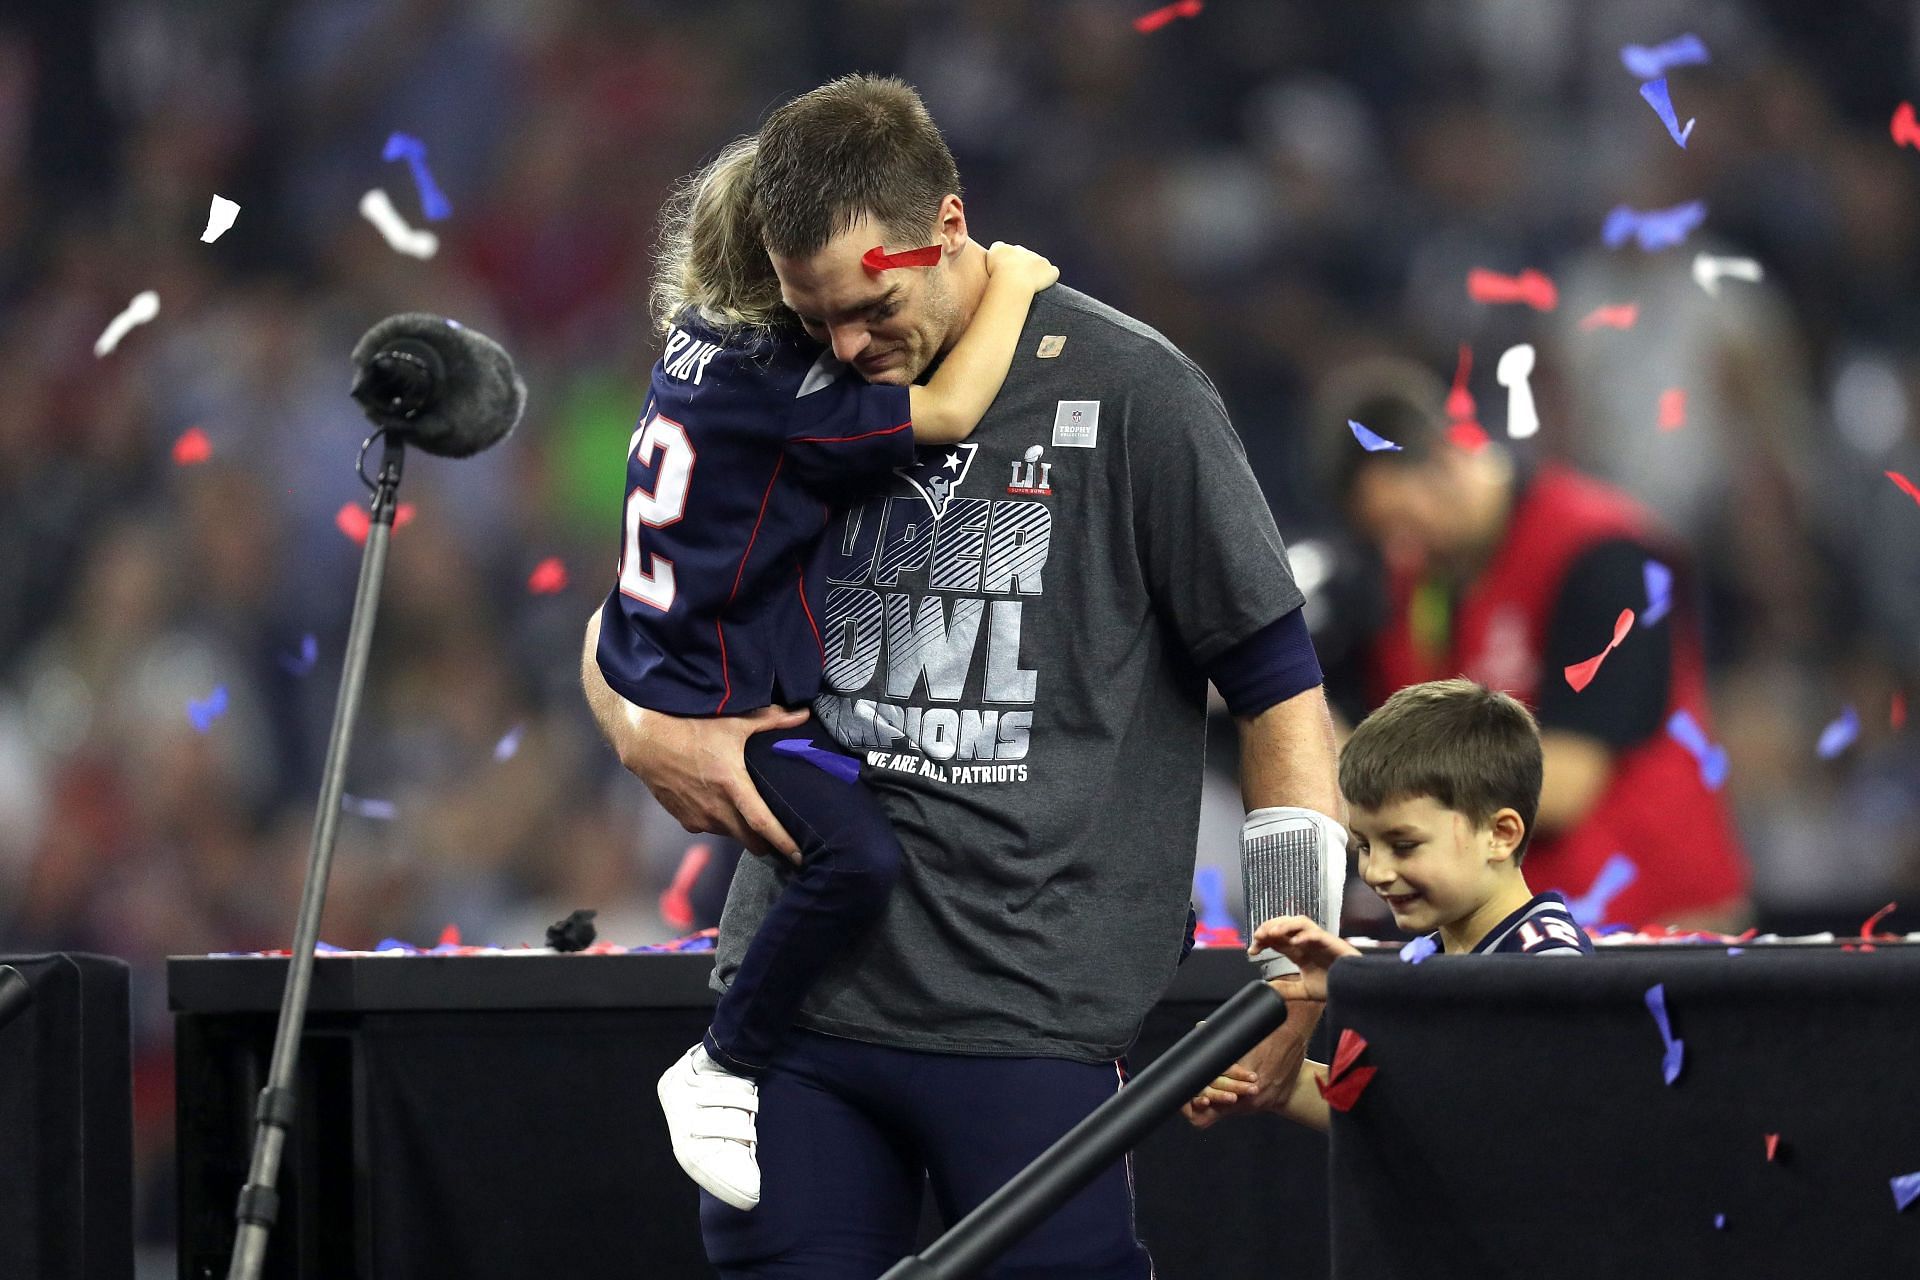 NFL fans got emotional hearing Tom Brady talk about fatherhood